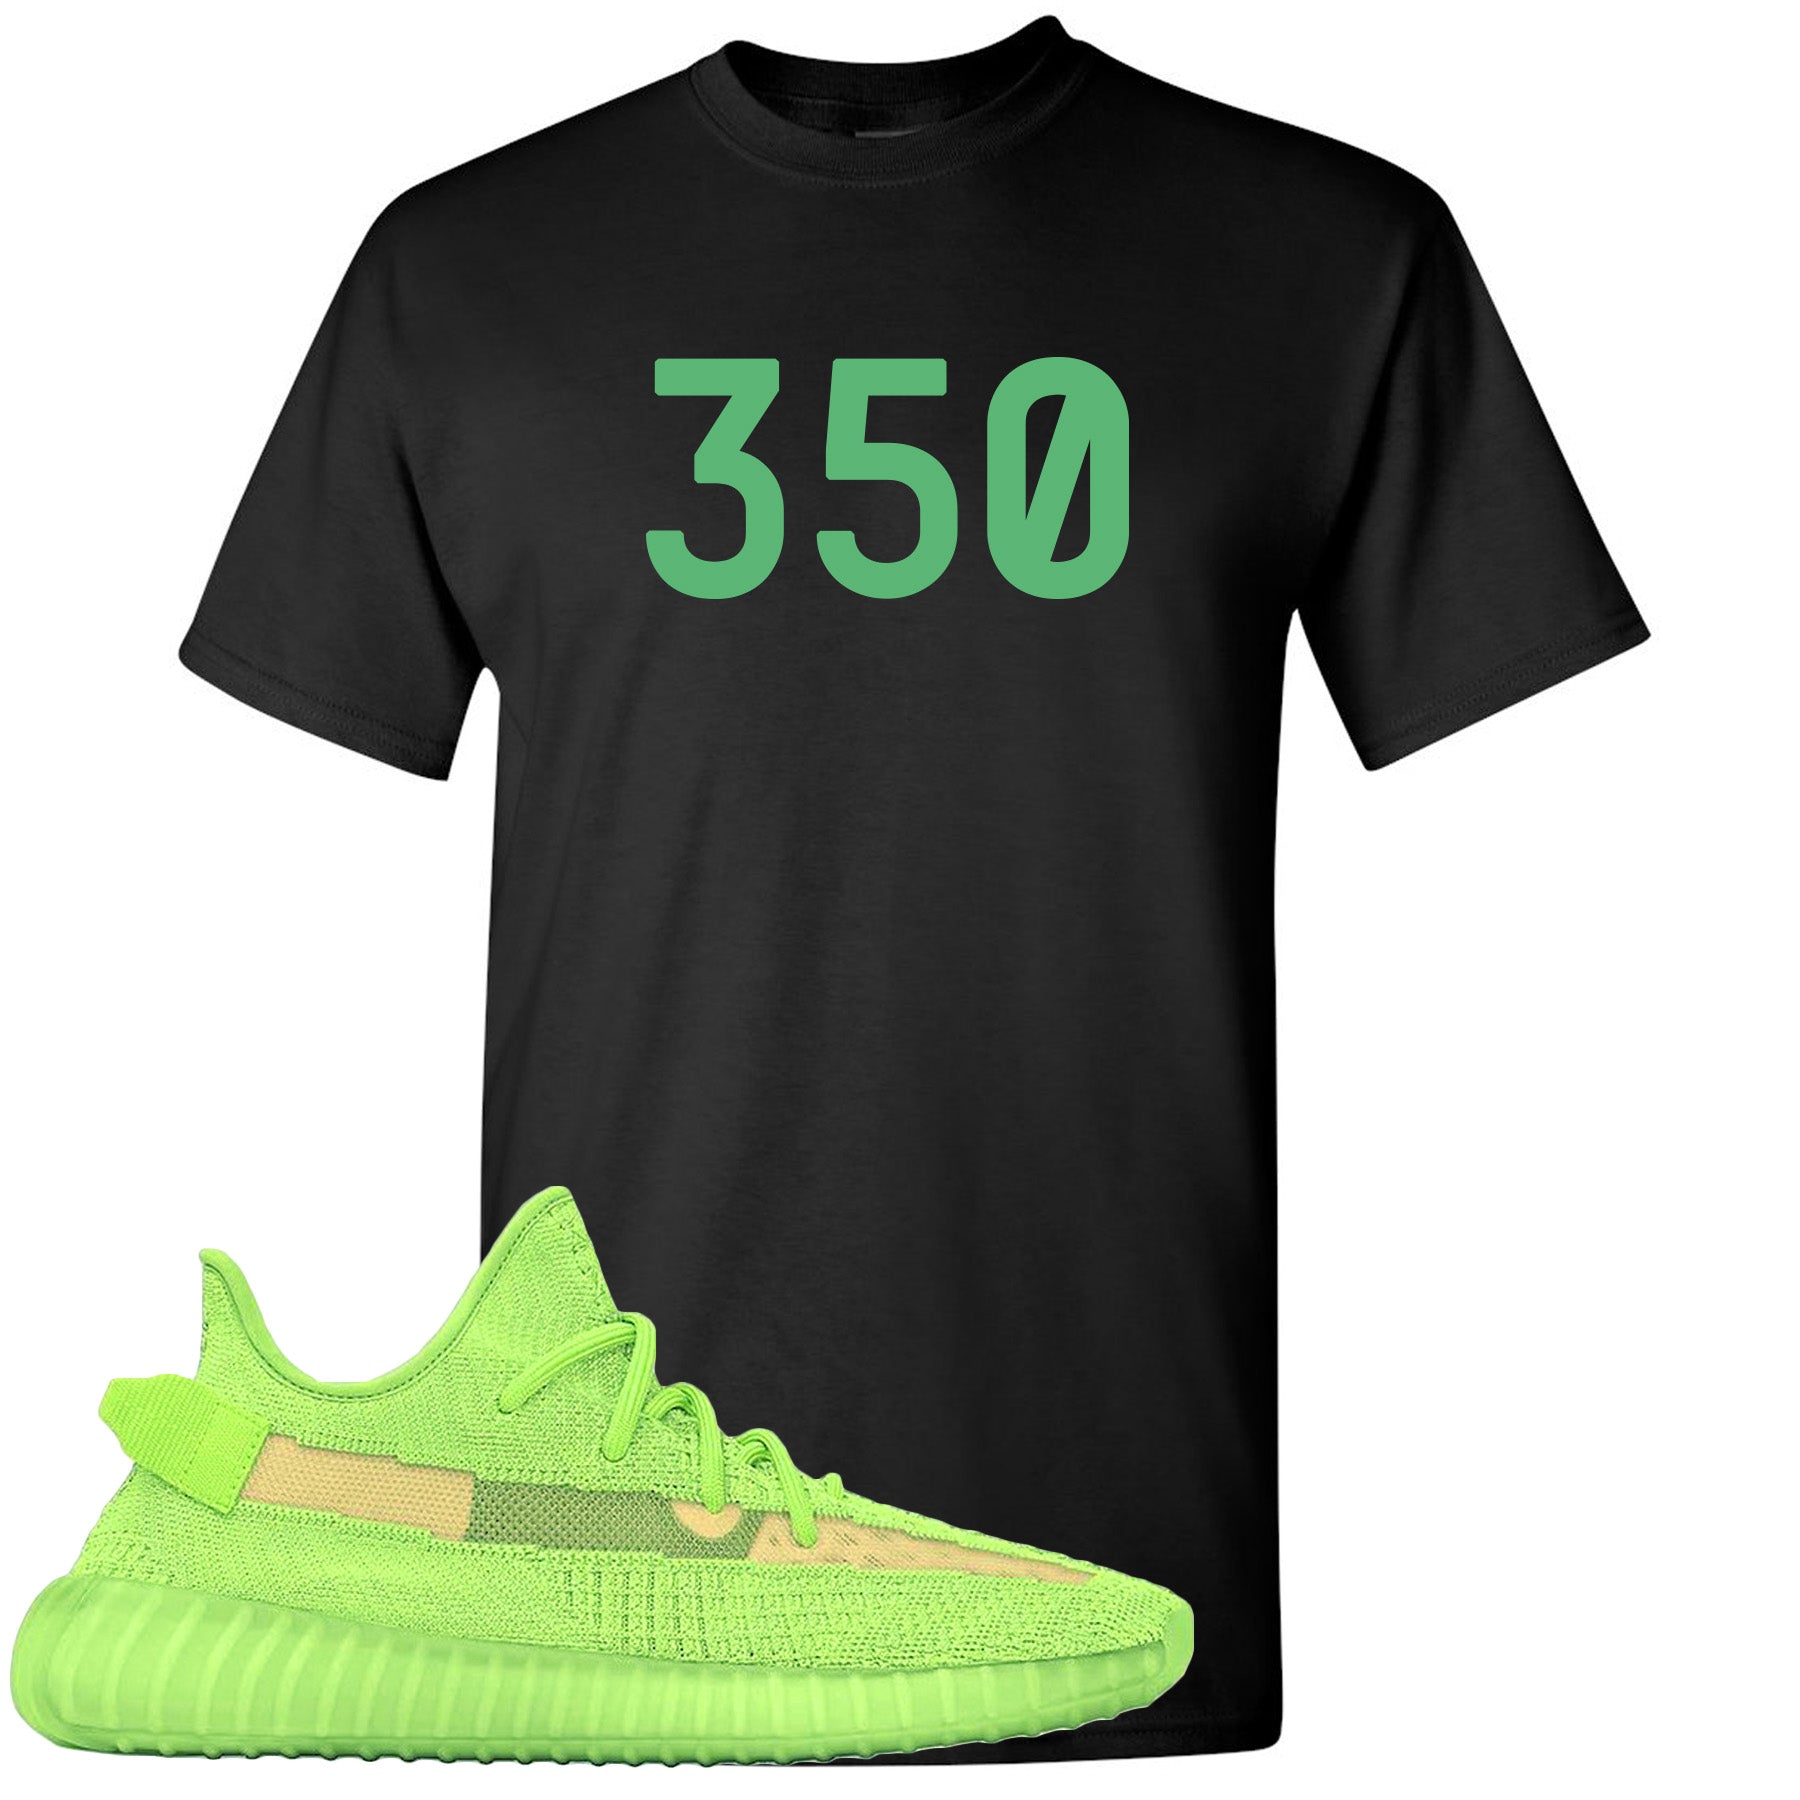 yeezy boost 350 v2 t shirt